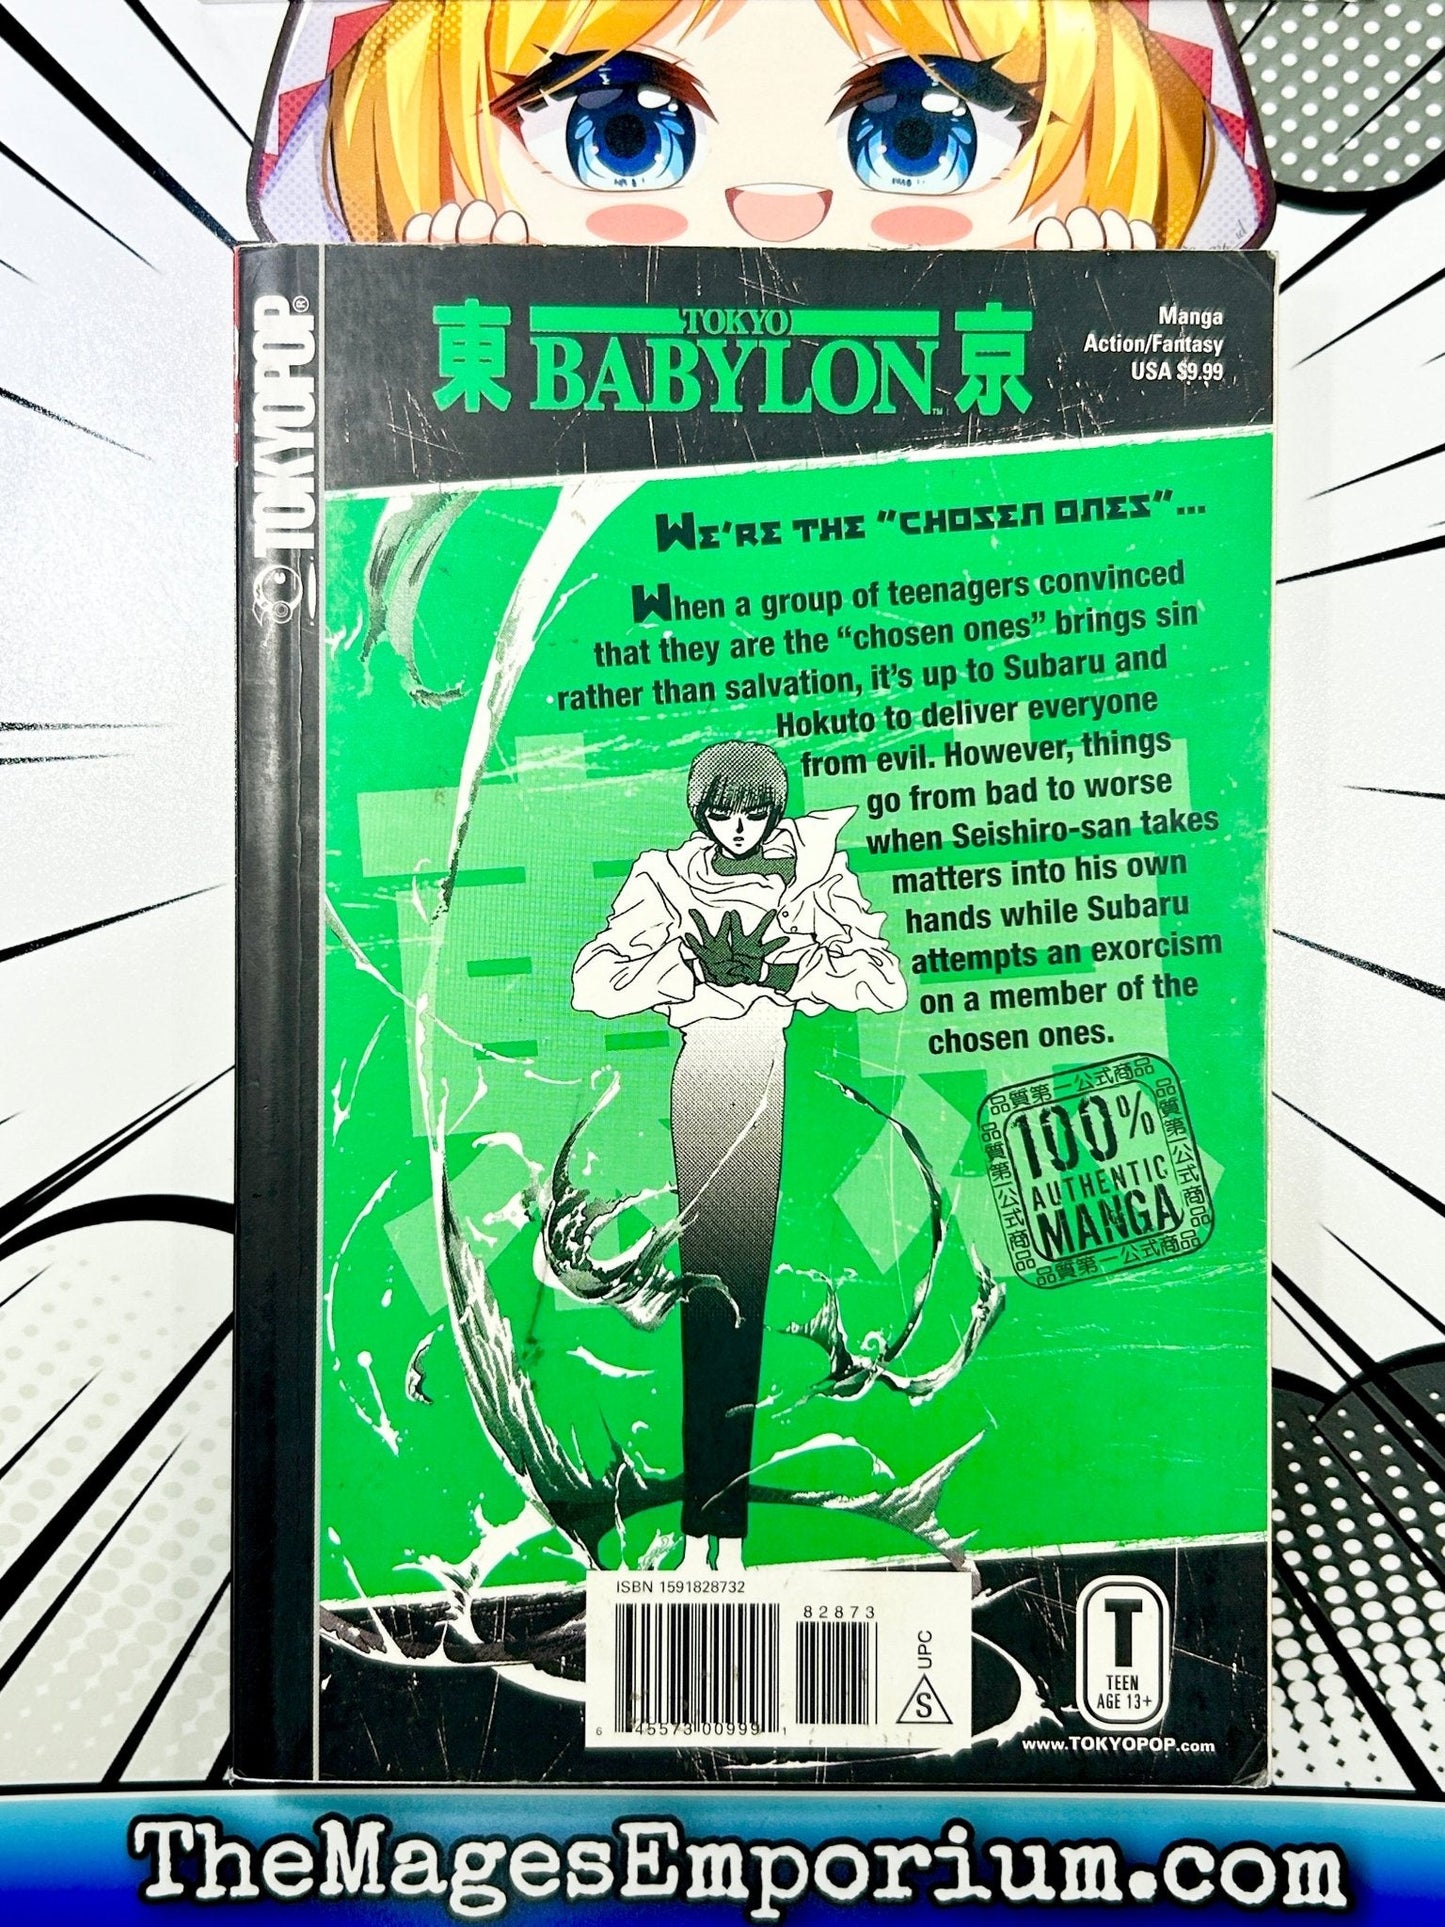 Tokyo Babylon Vol 3